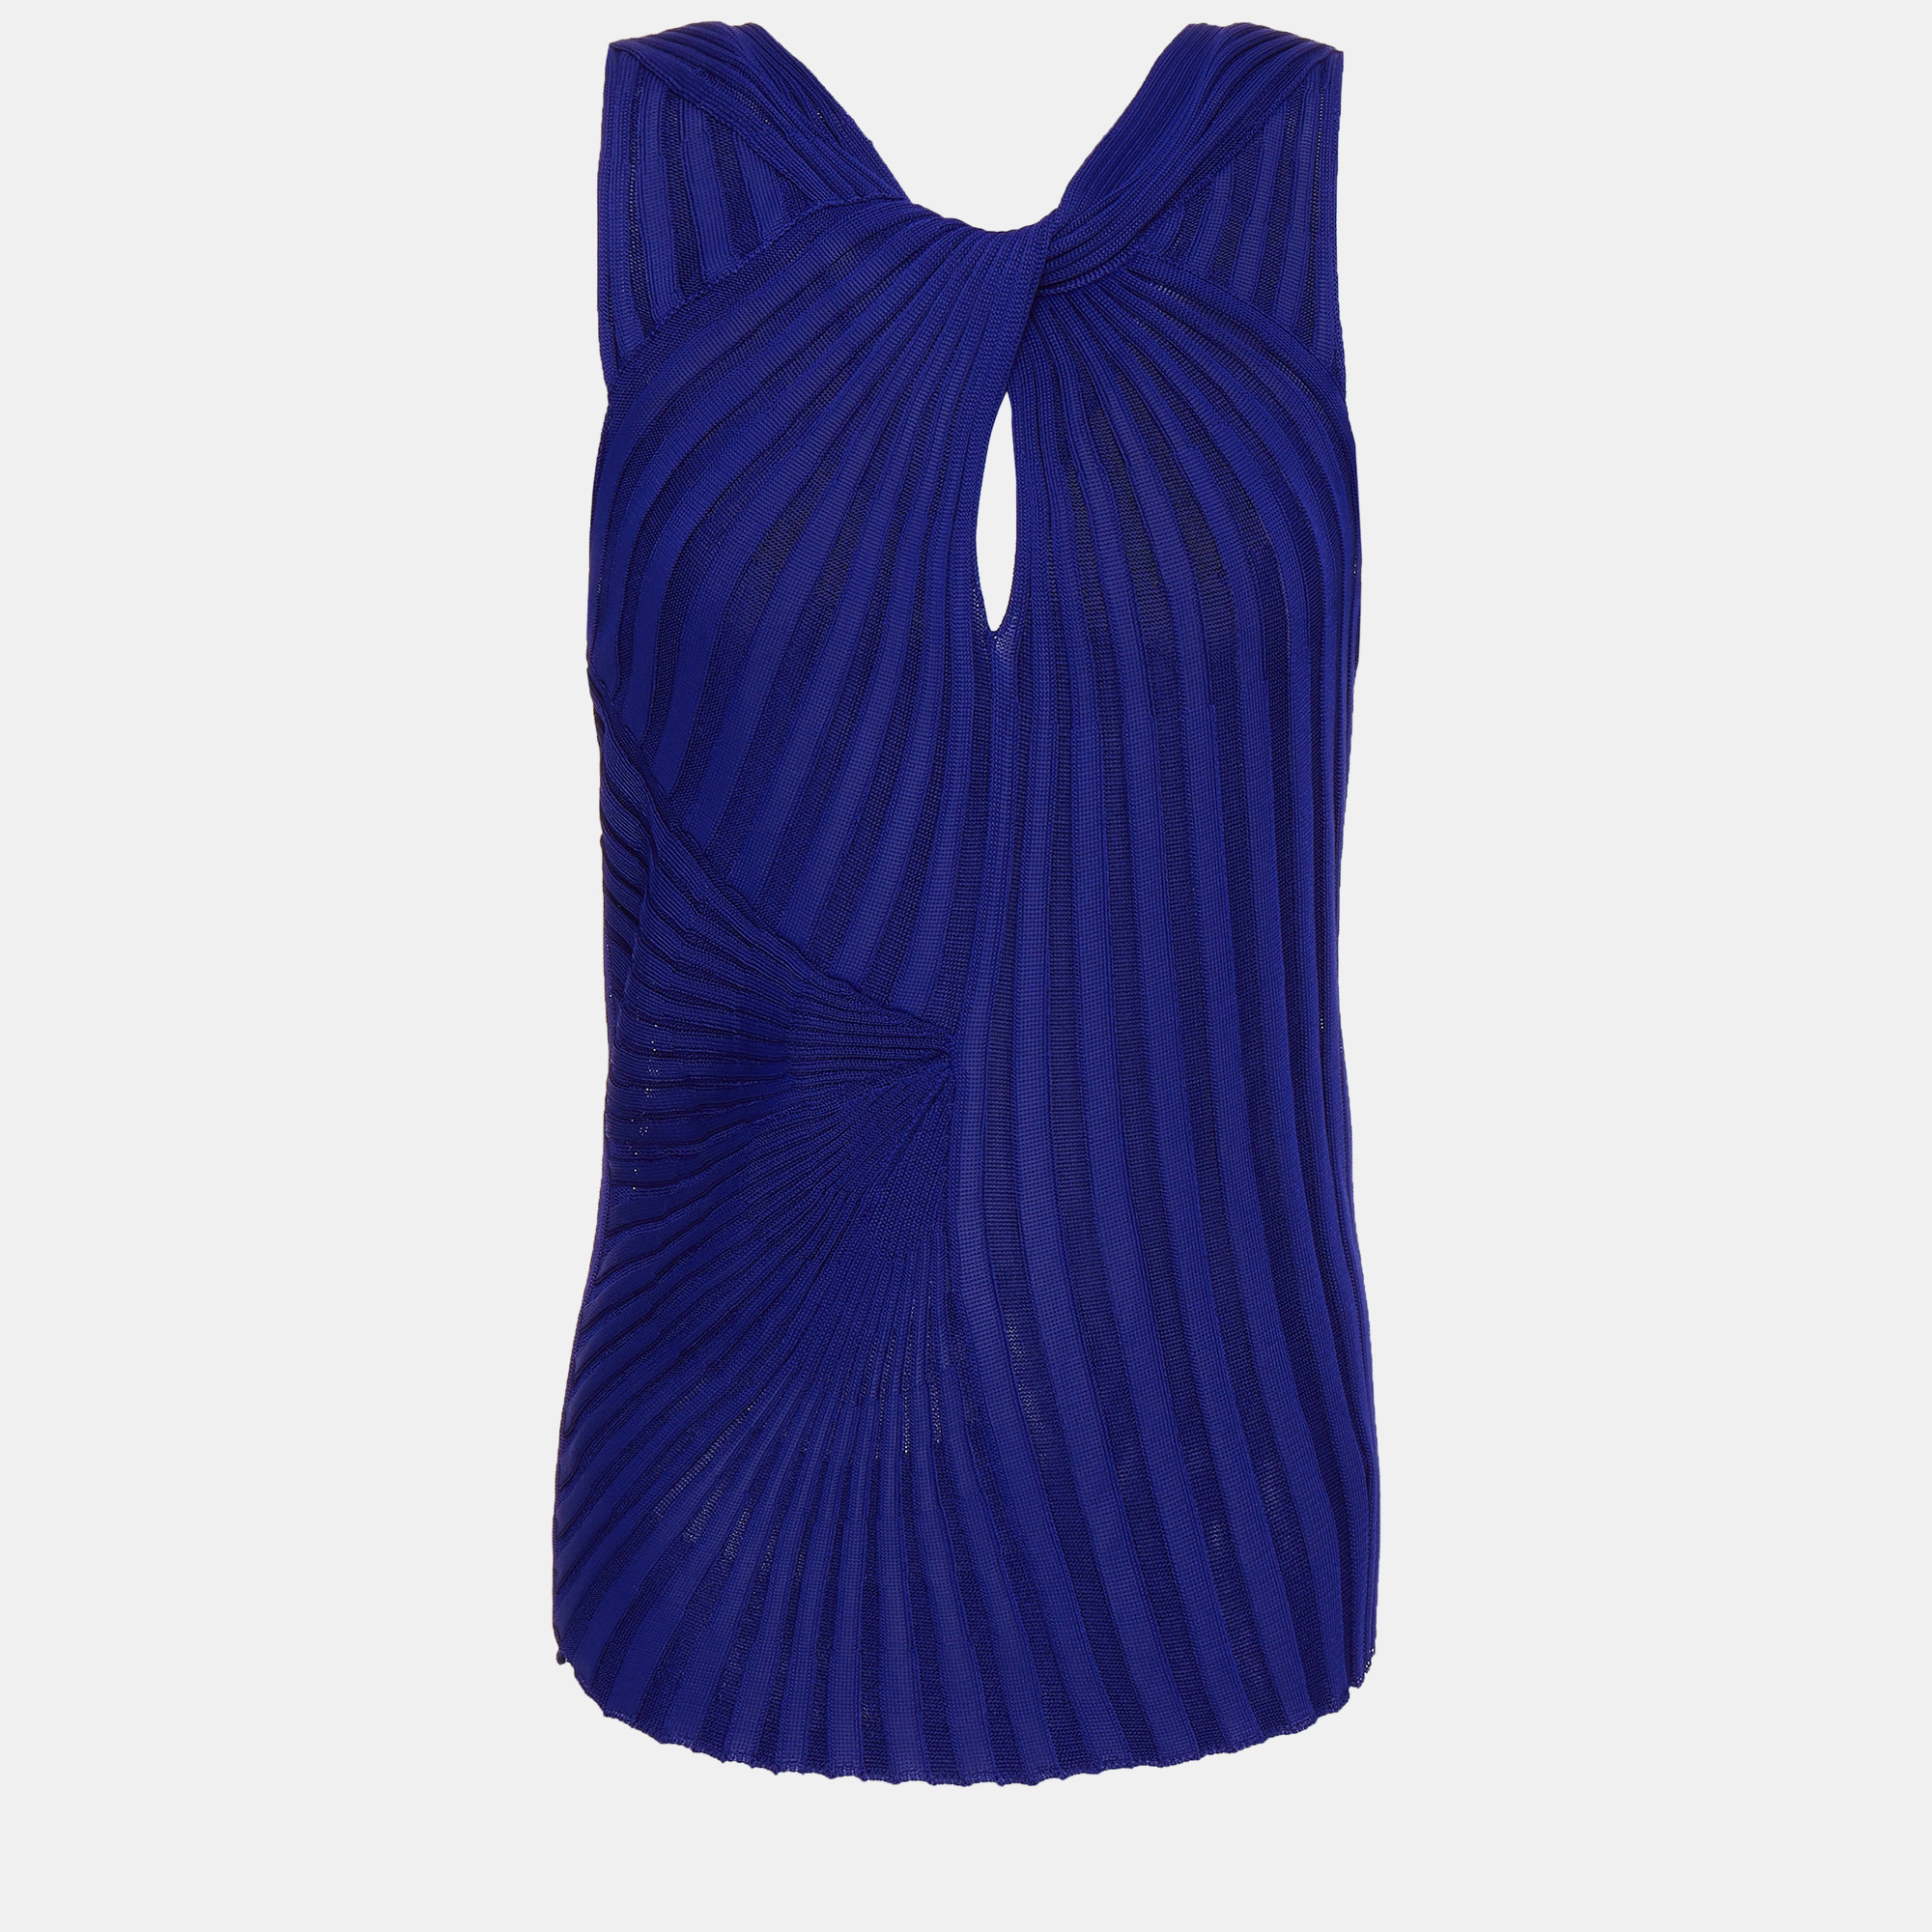 Roberto cavalli blue knit sleeveless top size 42